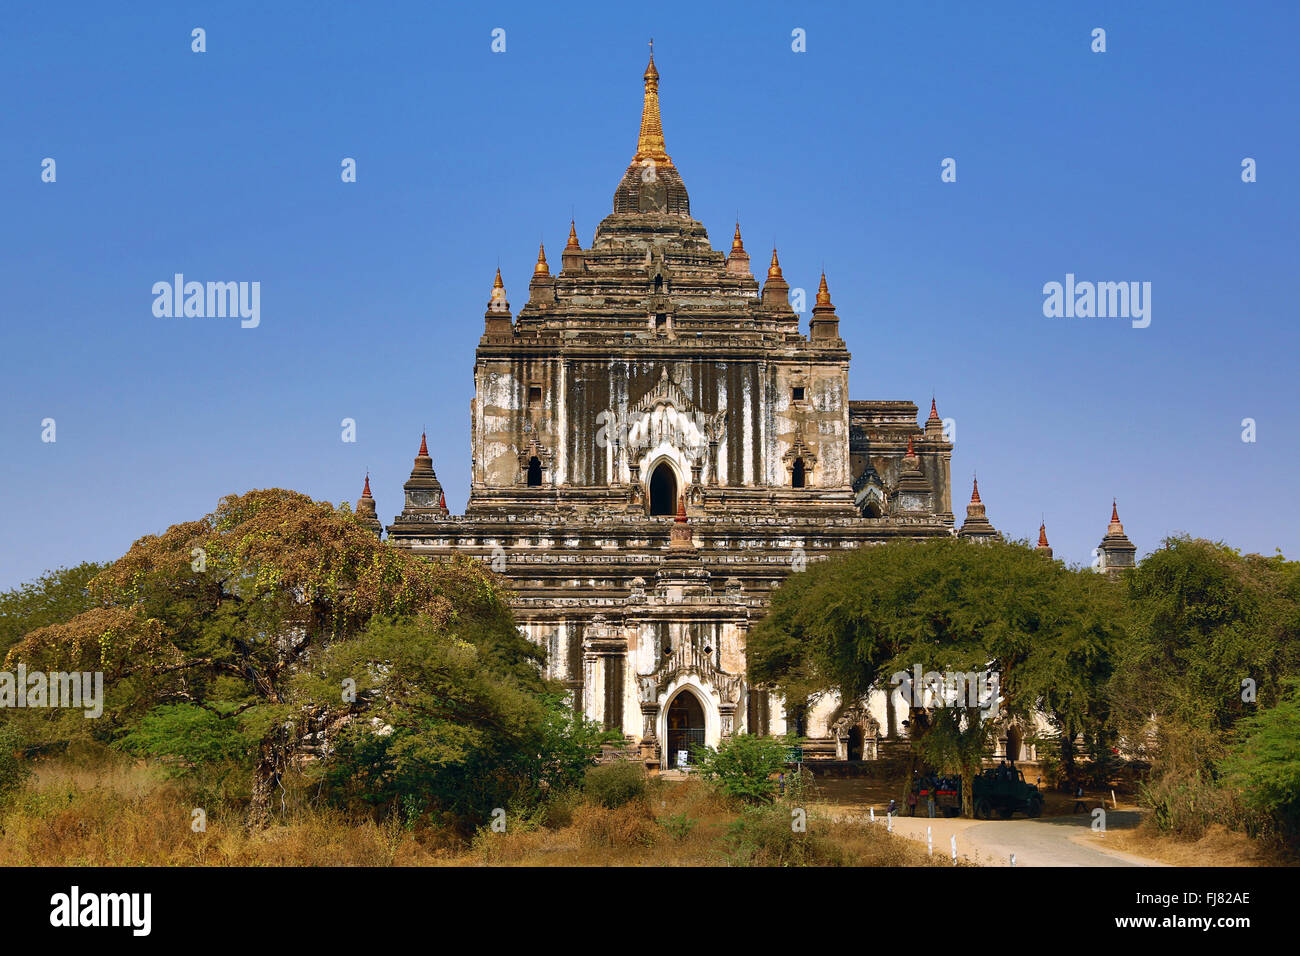 Thatbyinnyu Temple Pagoda in Old Bagan, Bagan, Myanmar (Burma) Stock Photo